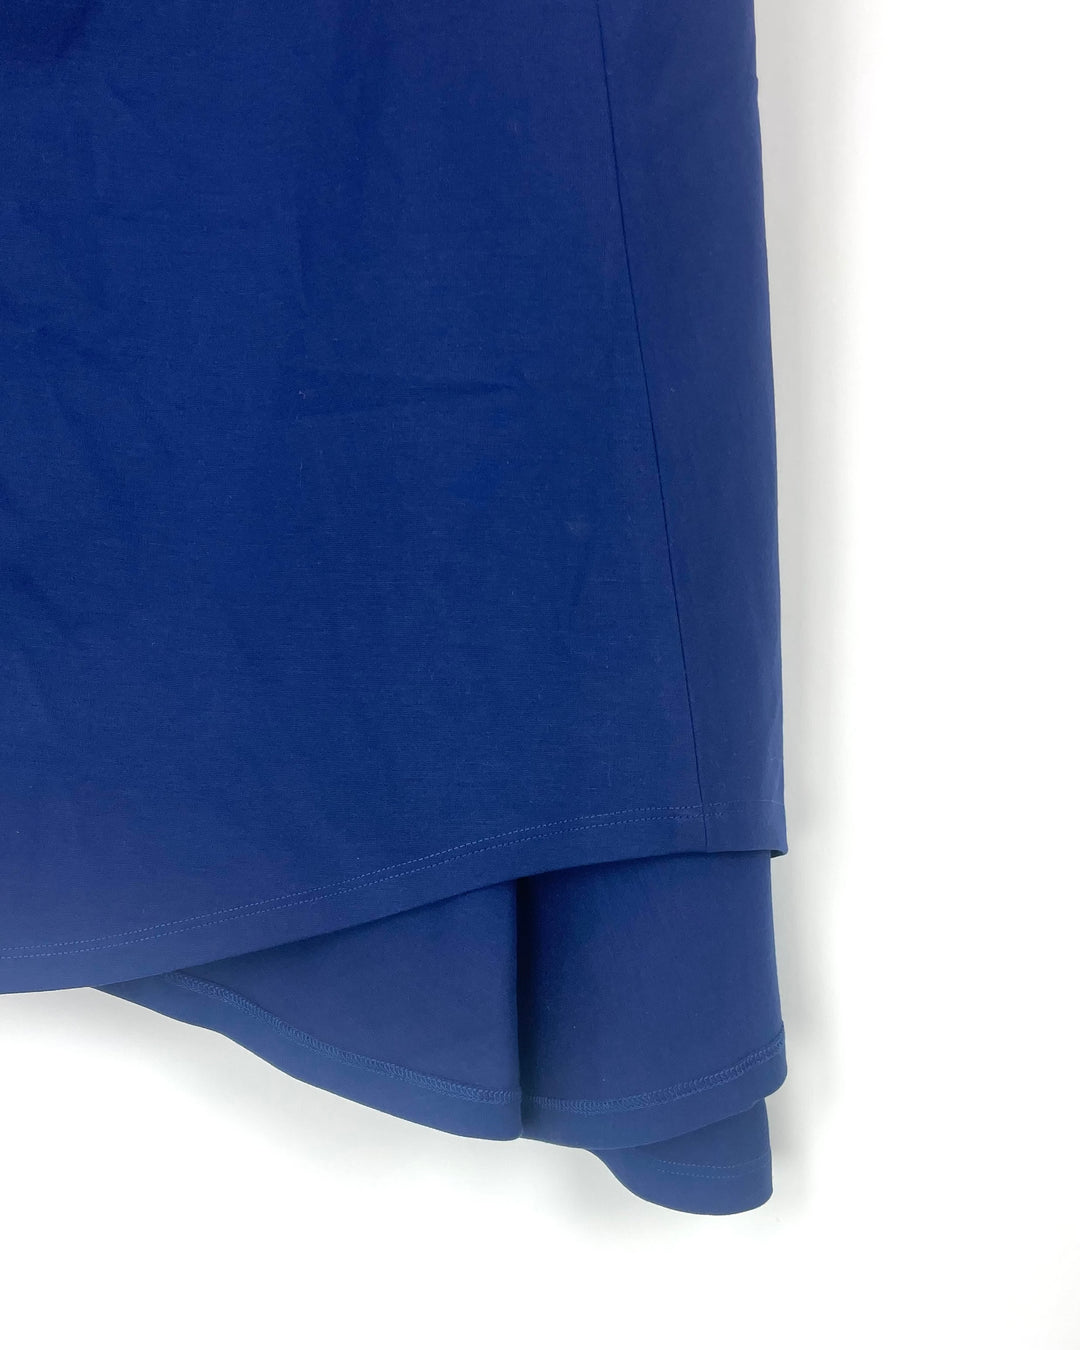 Dark Blue Asymmetrical Skirt - Size 16, 18 and 20